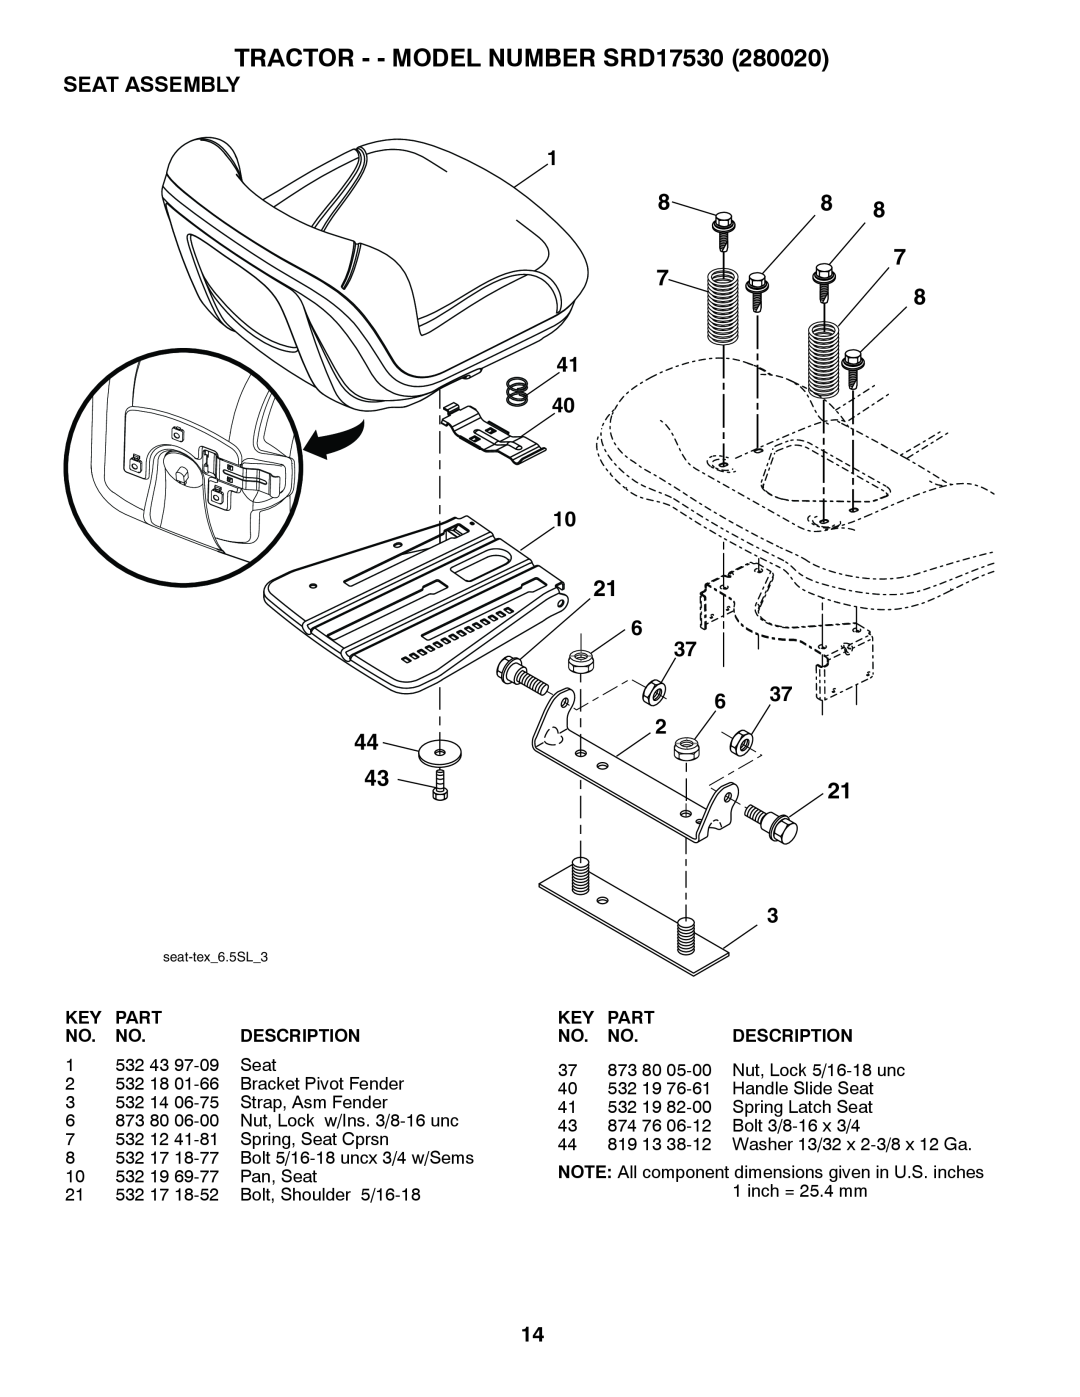 Husqvarna SRD17530 (280020) manual Seat Assembly, TRACTOR - - MODEL NUMBER SRD17530, seat-tex6.5SL3 